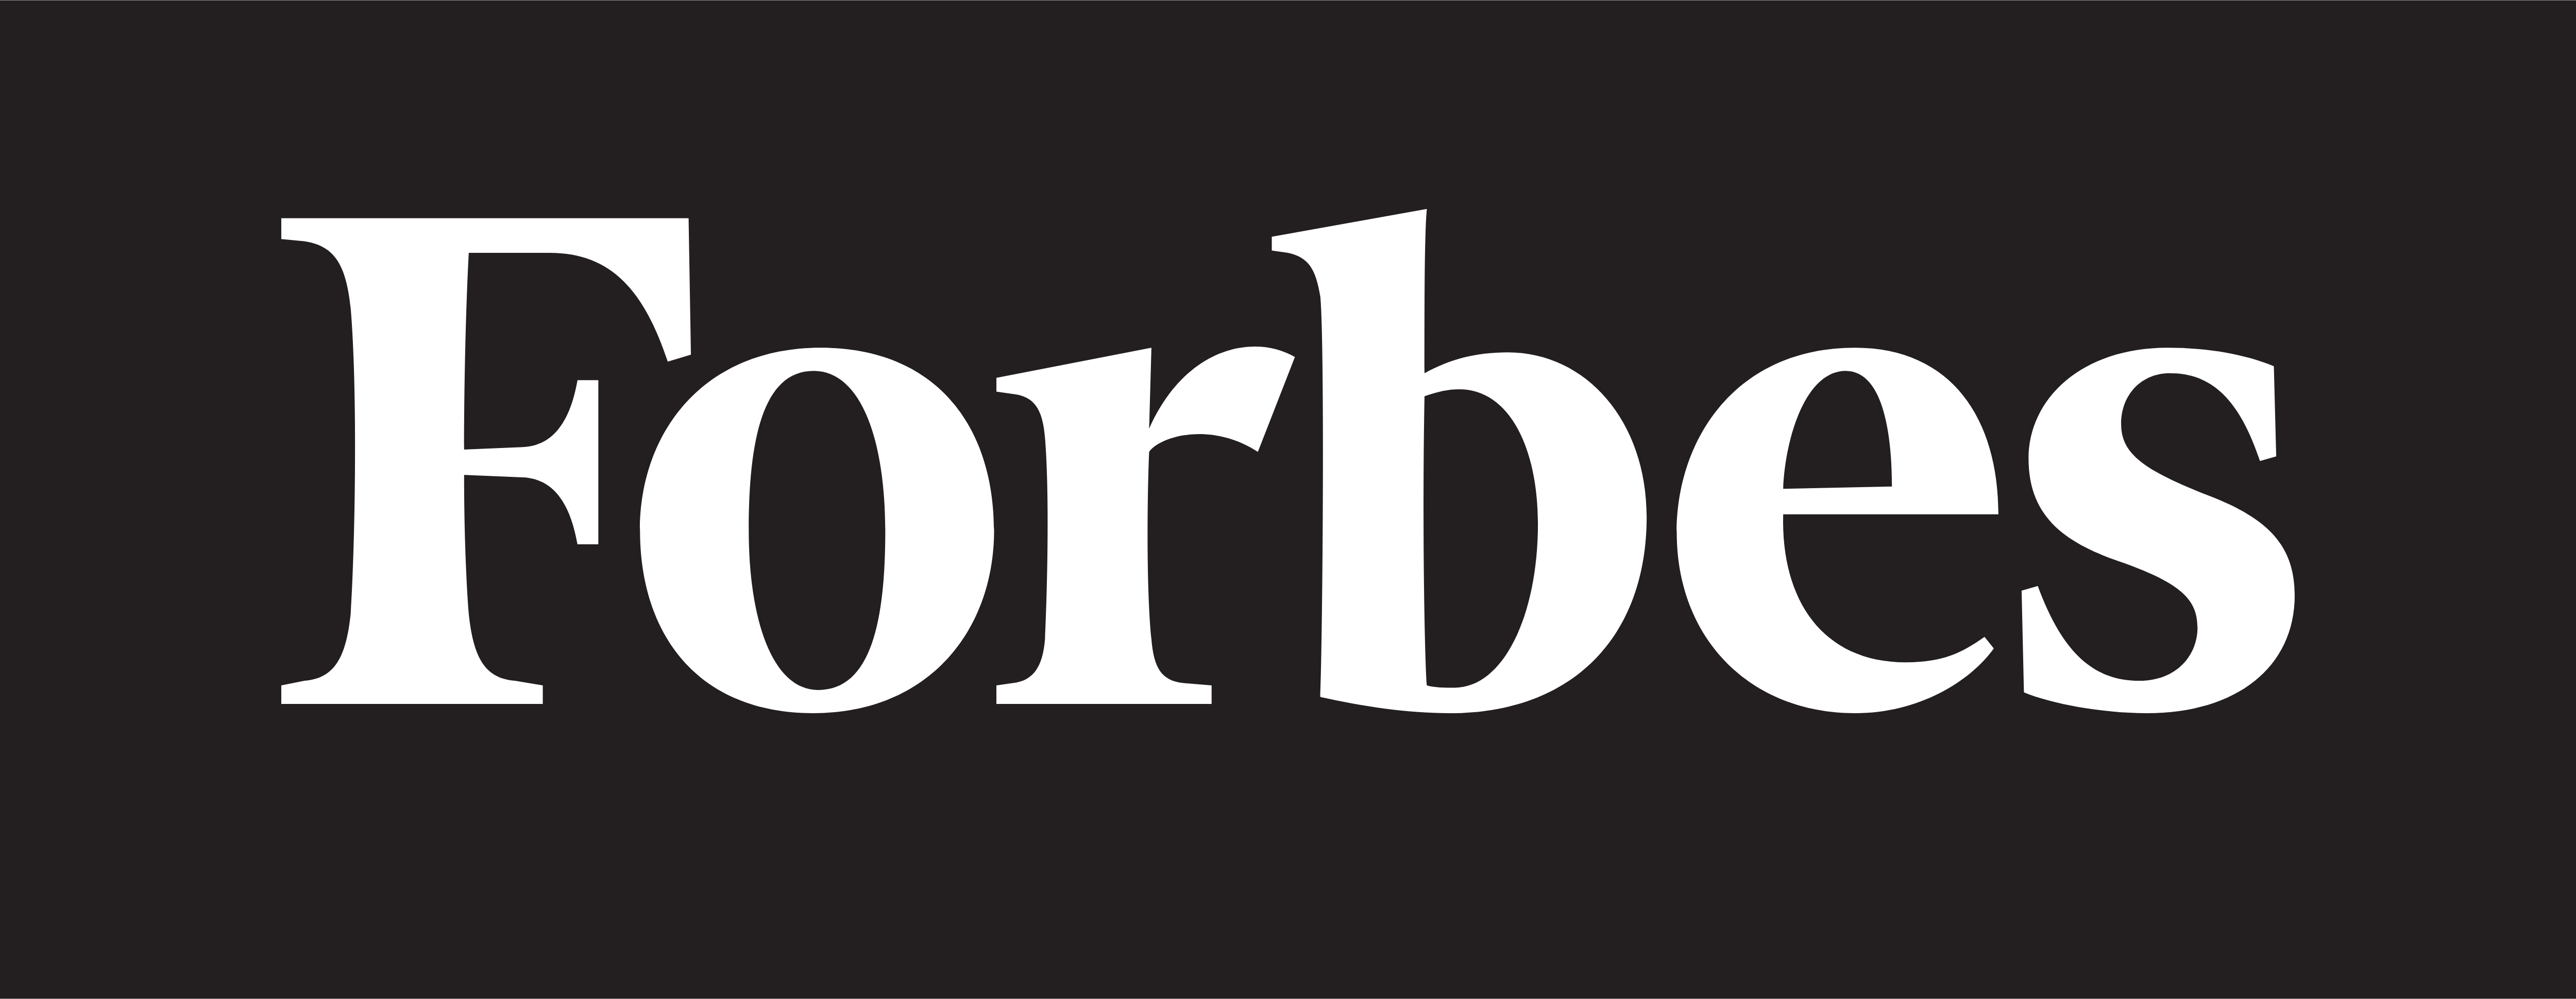 Forbes – Завантажити логотипи